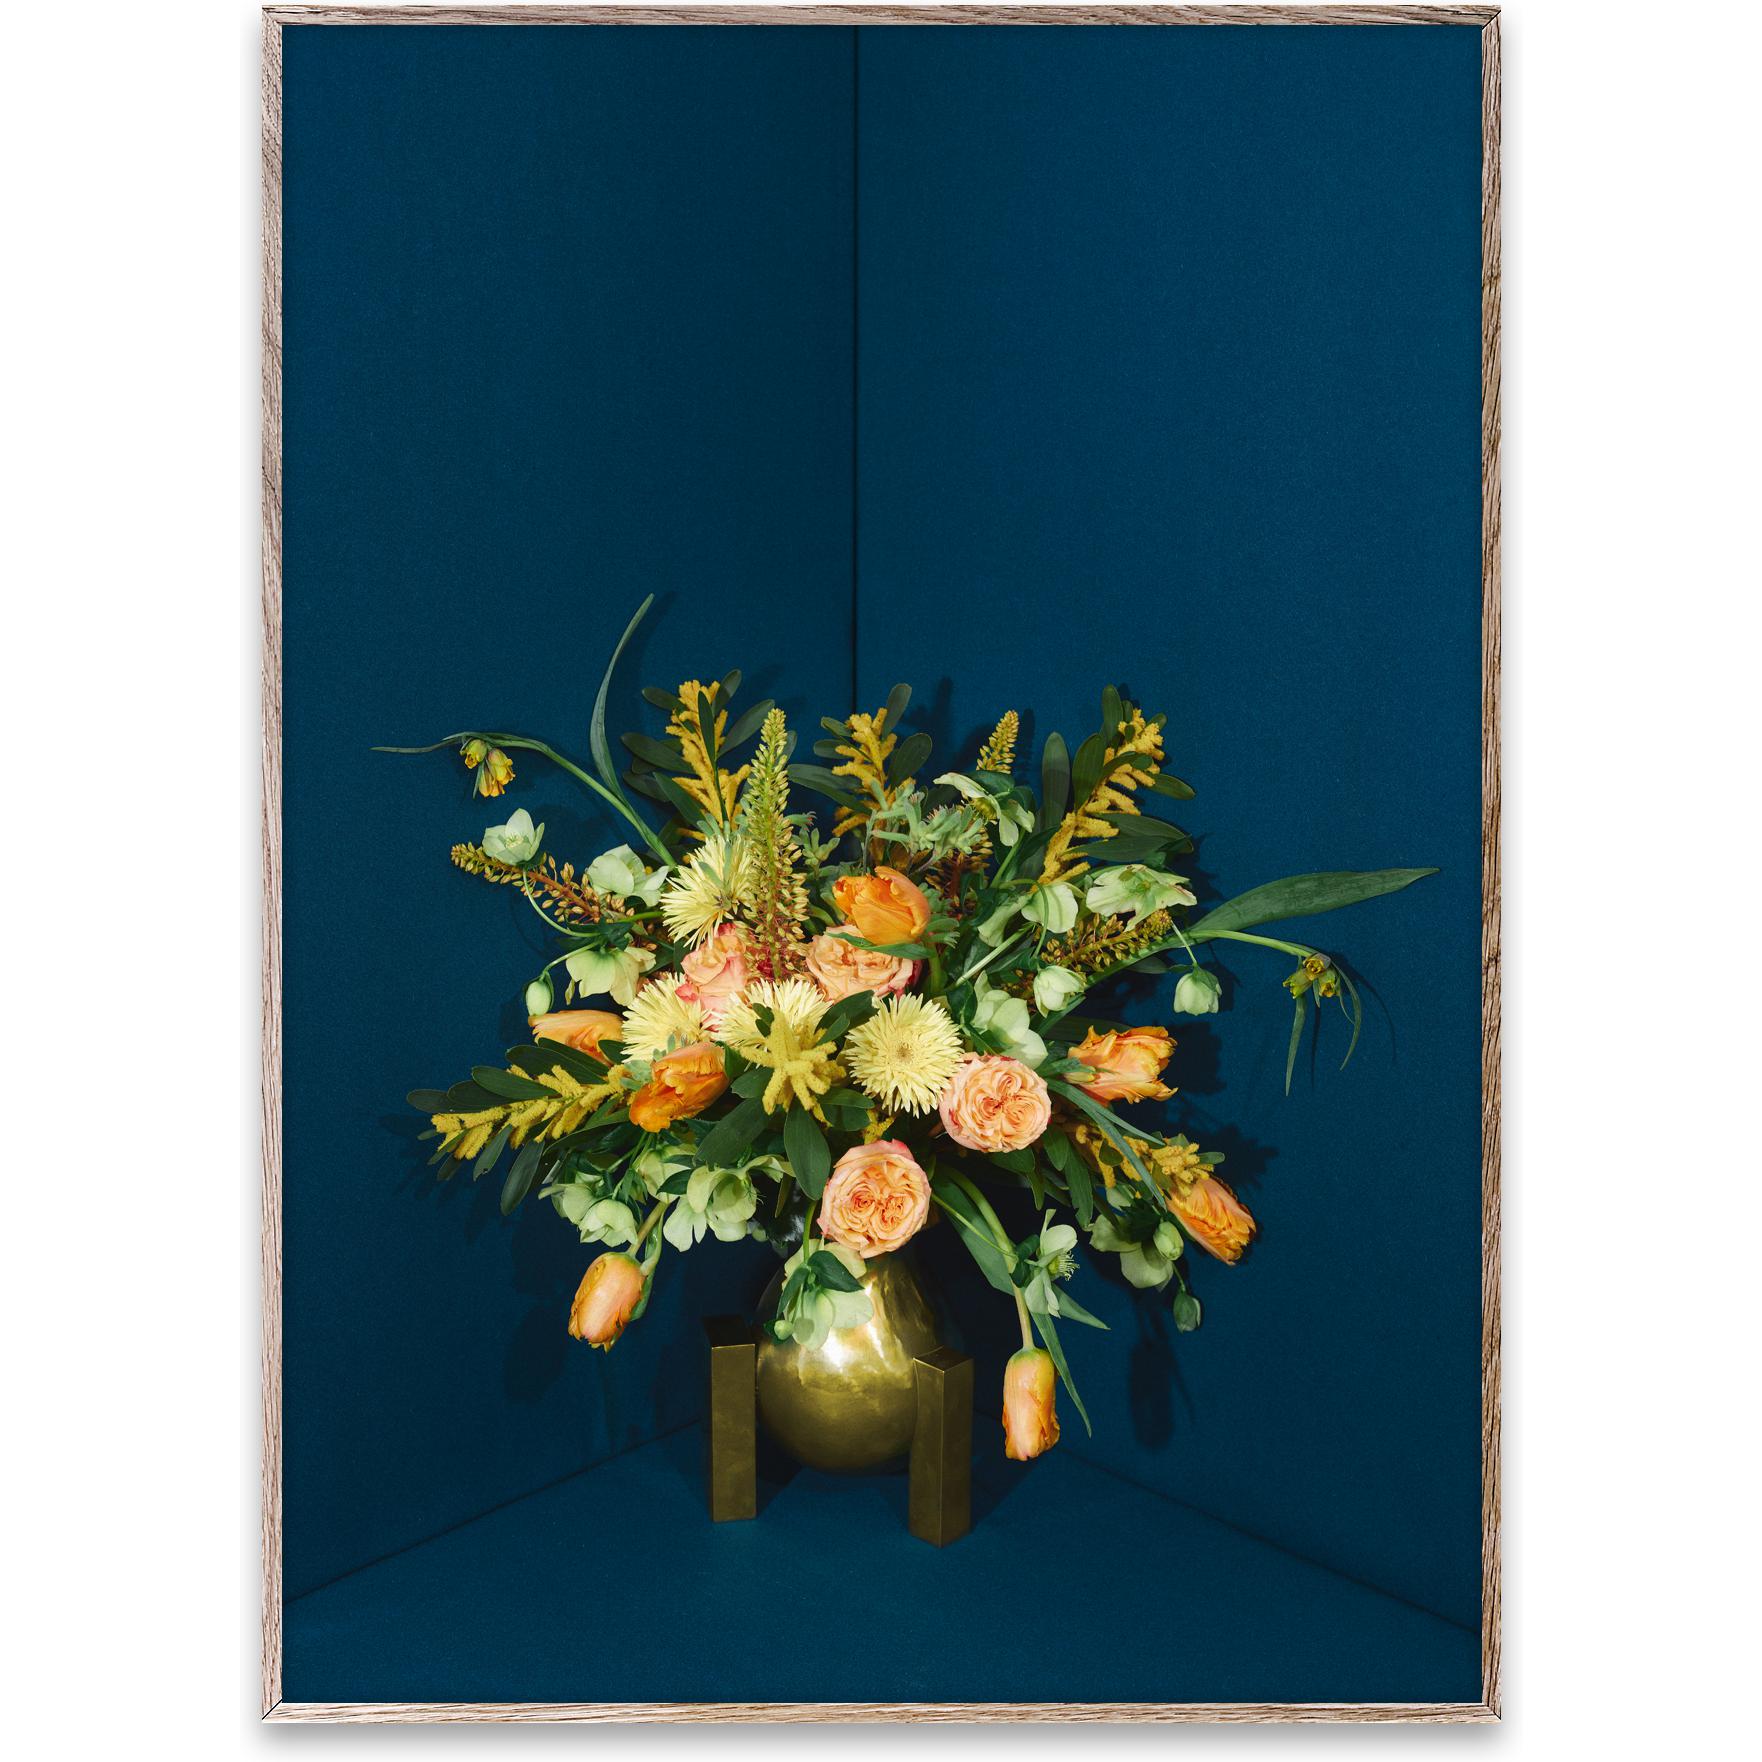 Paper Collective Blomst 05 Poster 50 x 70 cm, bleu sarcelle